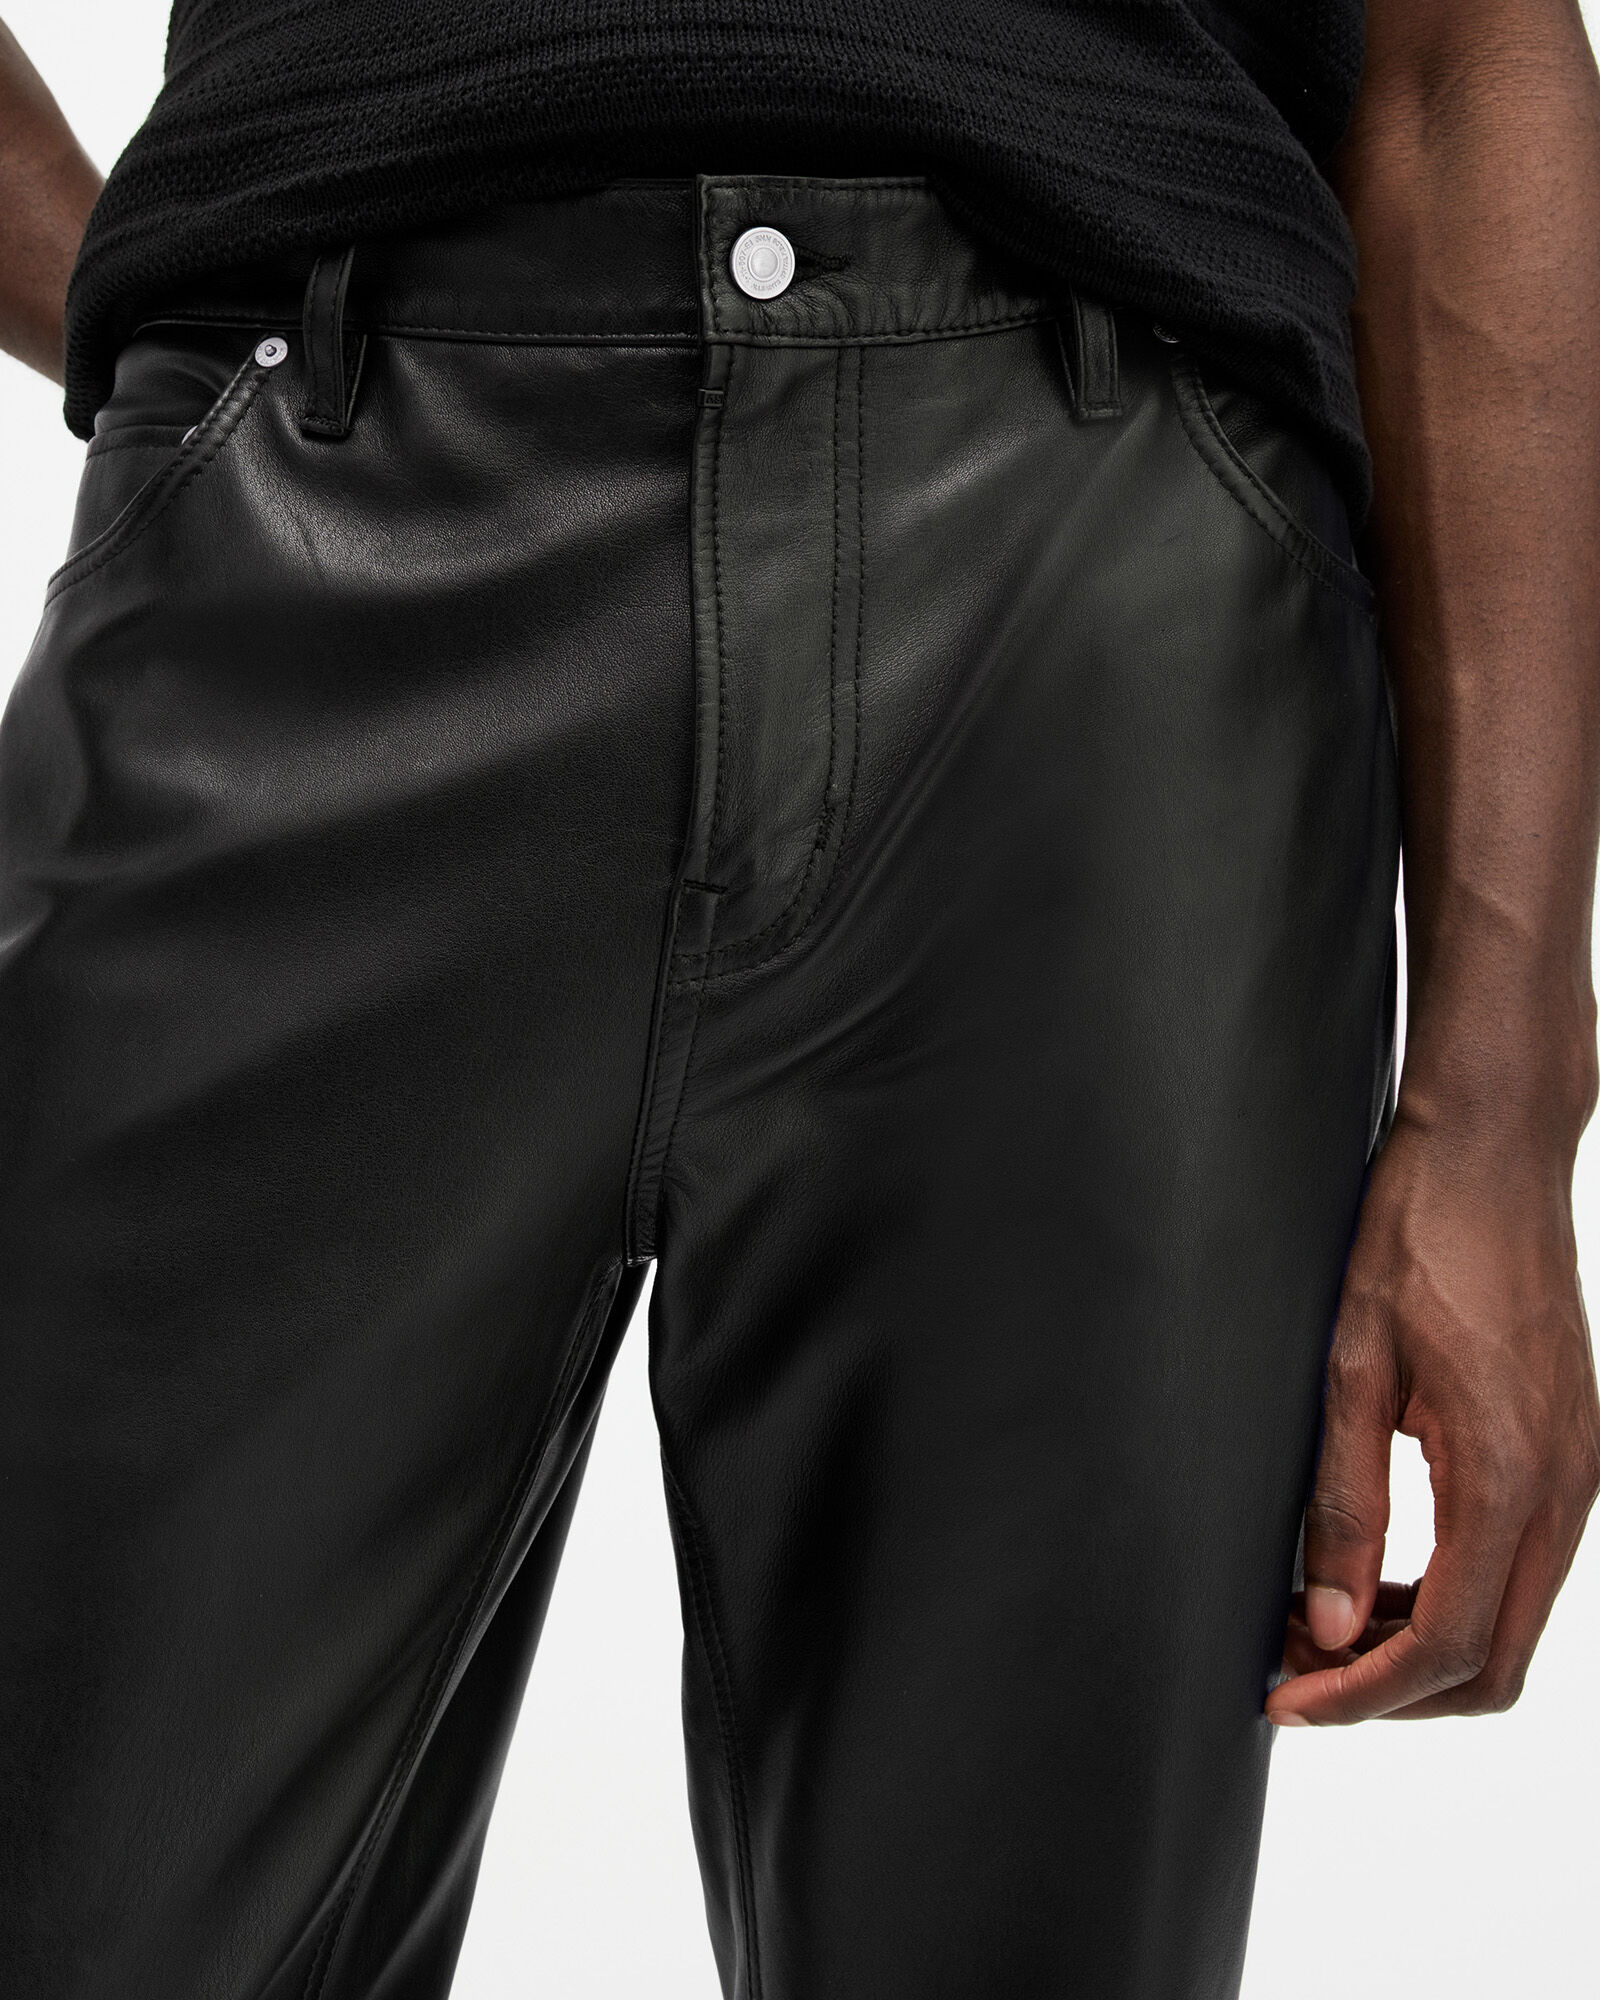 Nappa leather trousers - Studio - Pink | ZARA United States